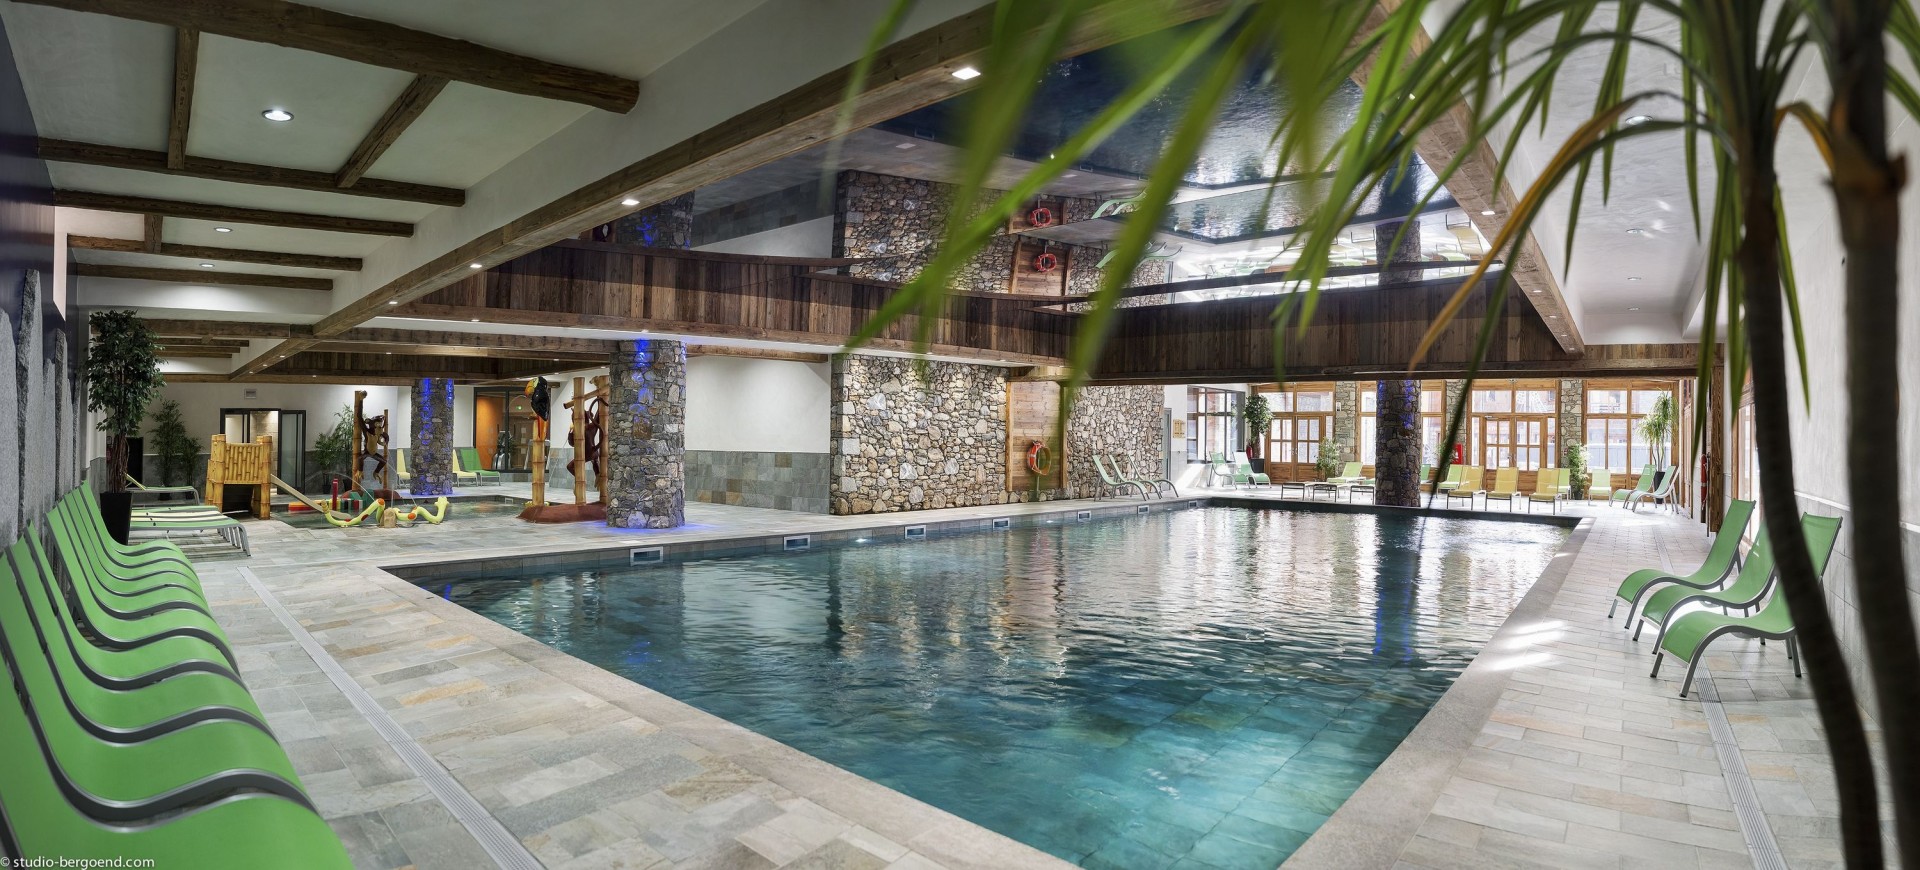 Tignes Rental Apartment Luxury Micata Swimming Pool